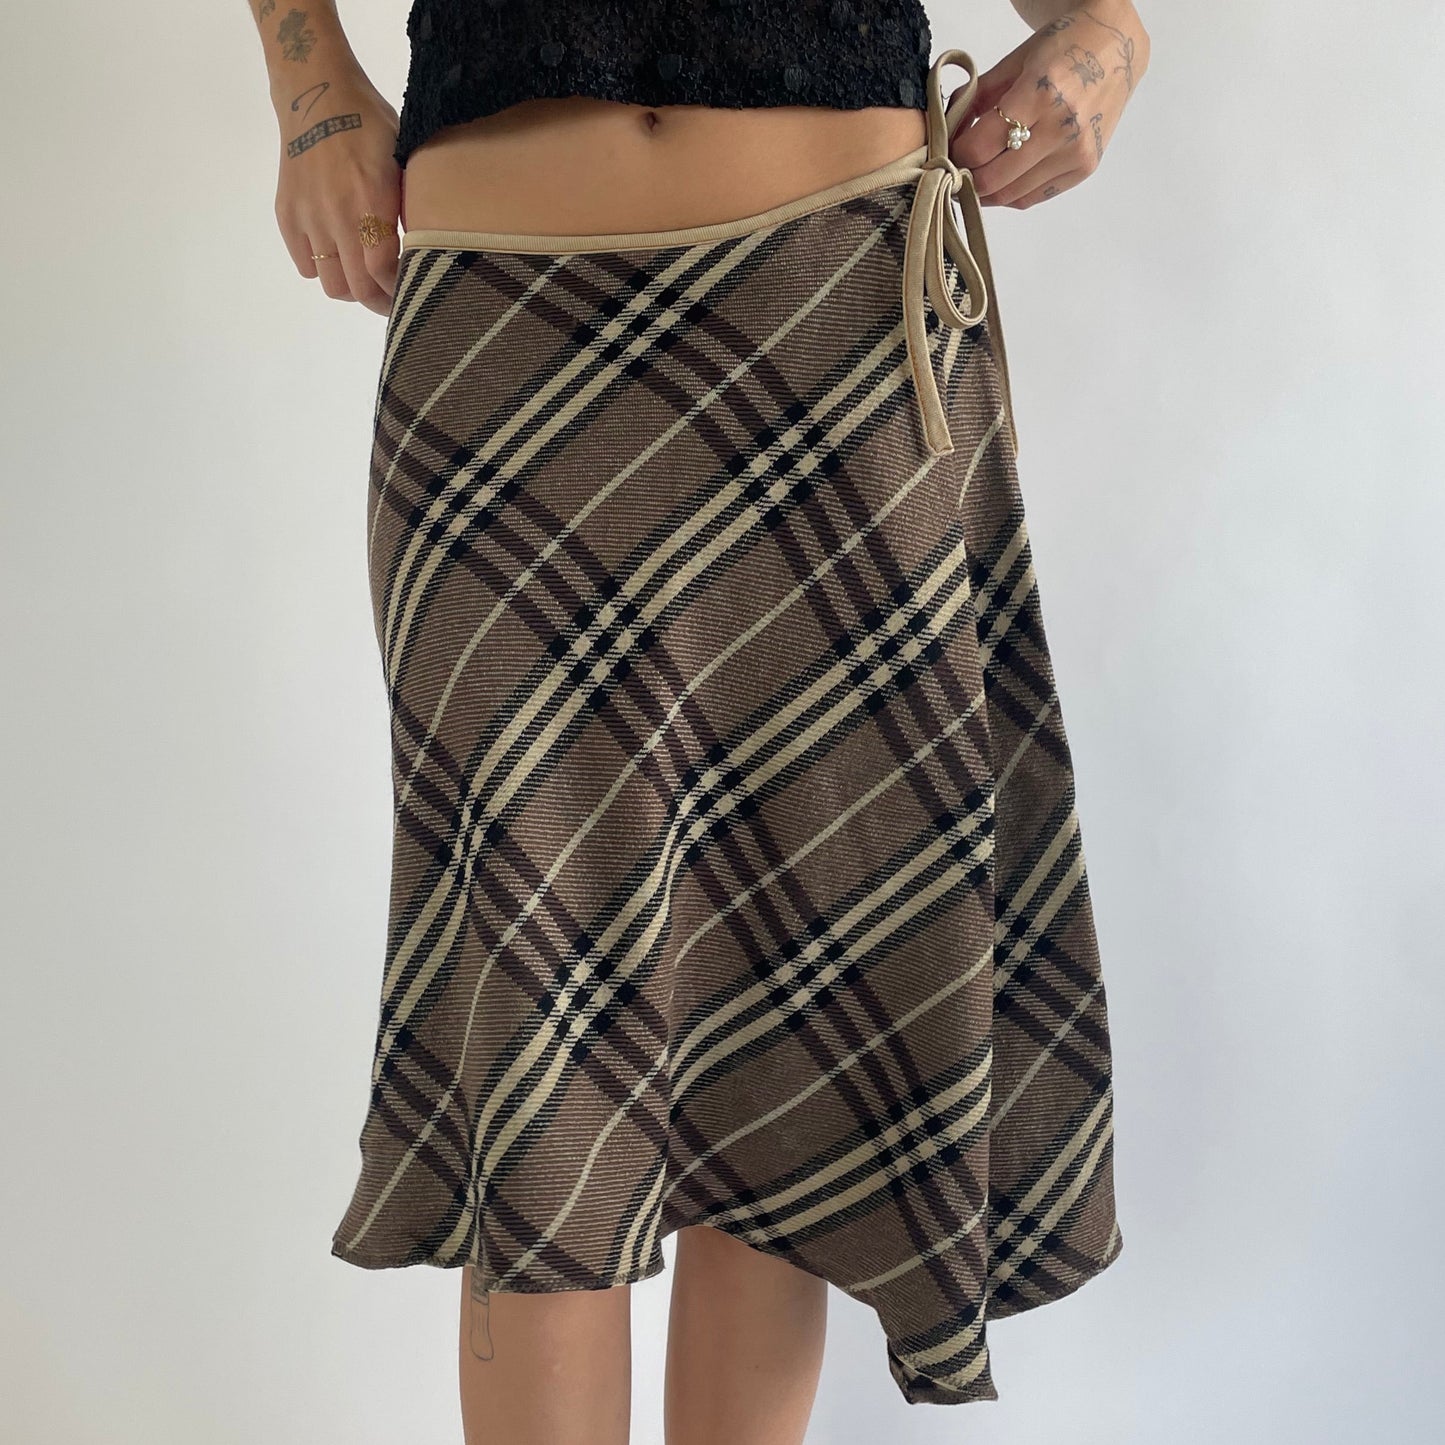 burberry plaid skirt